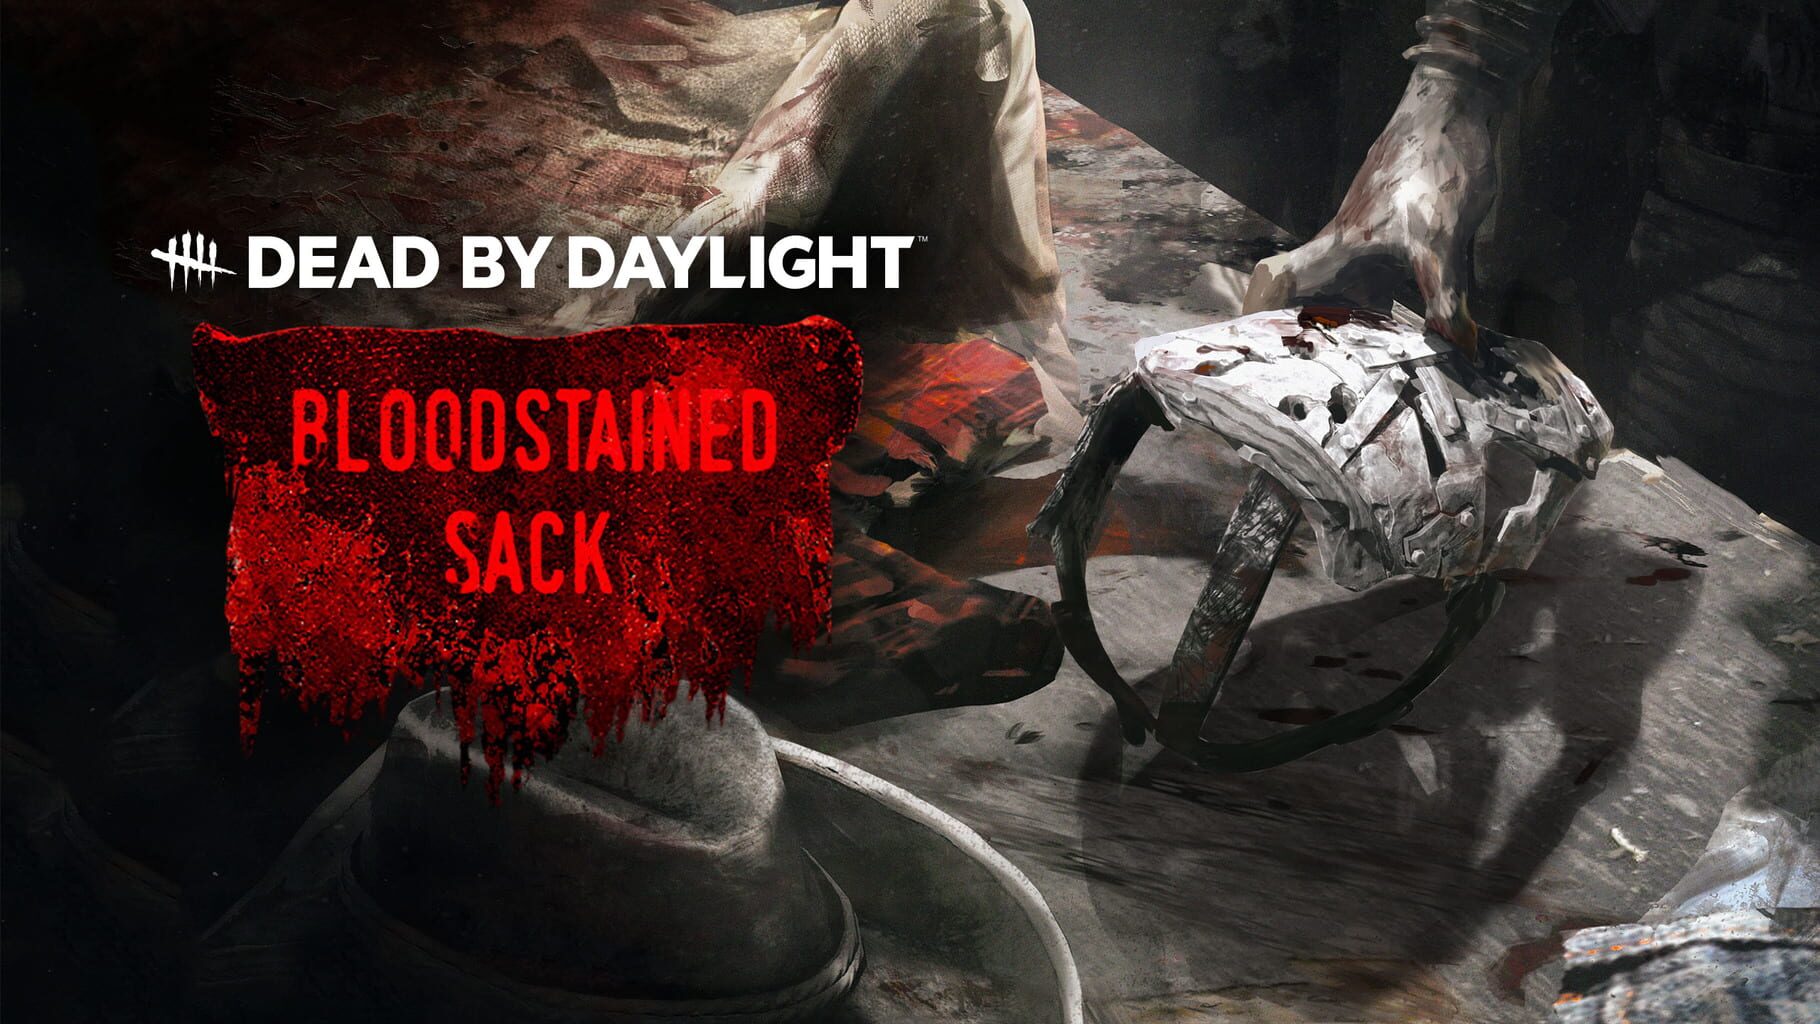 Arte - Dead by Daylight: The Bloodstained Sack